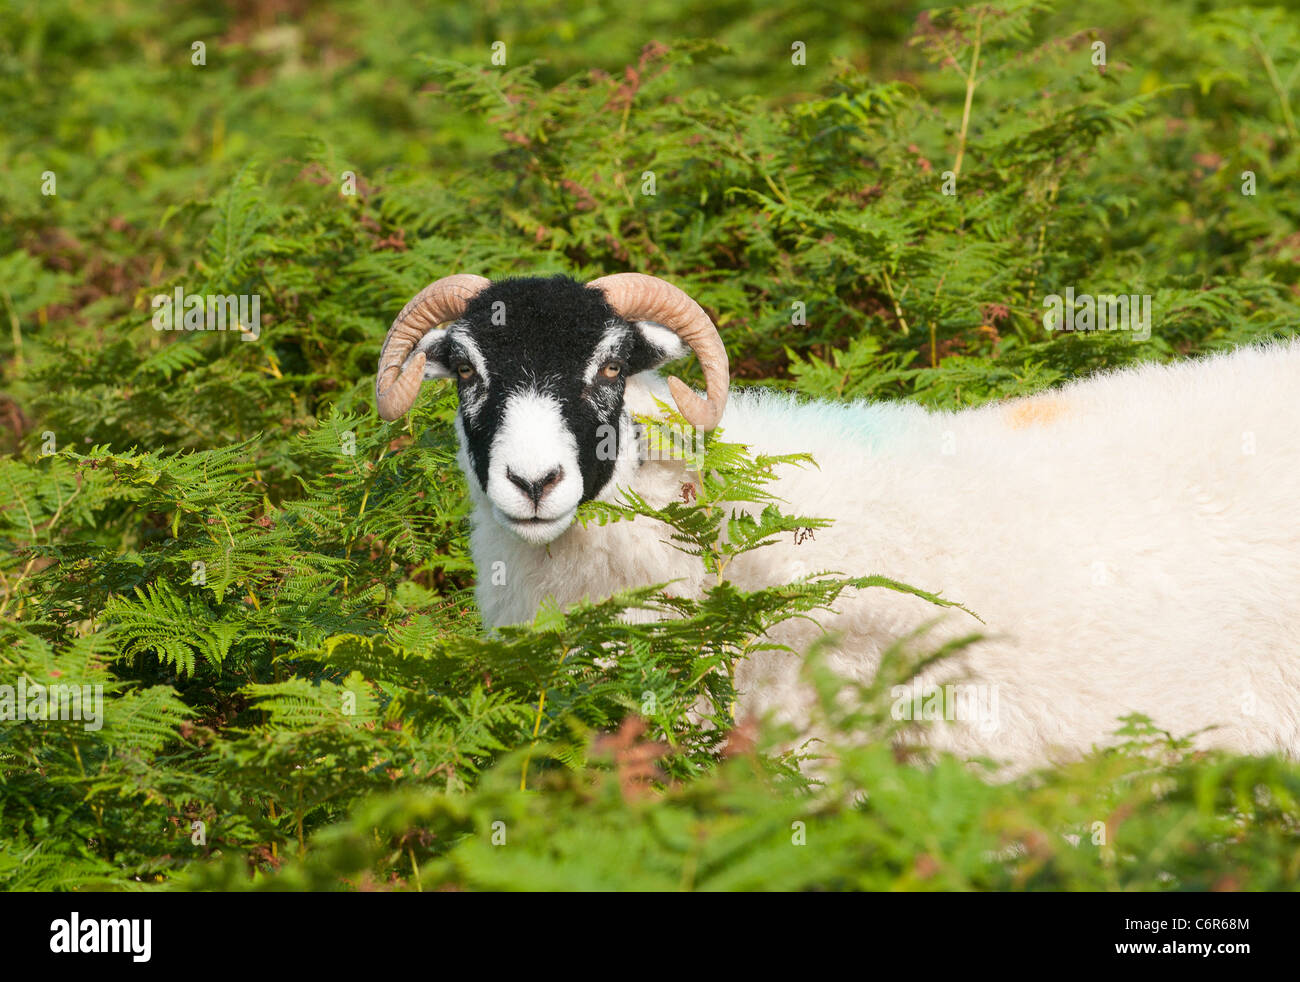 Horned Scottish Blackface sheep in bracken on Dartmoor, Devon UK Stock Photo